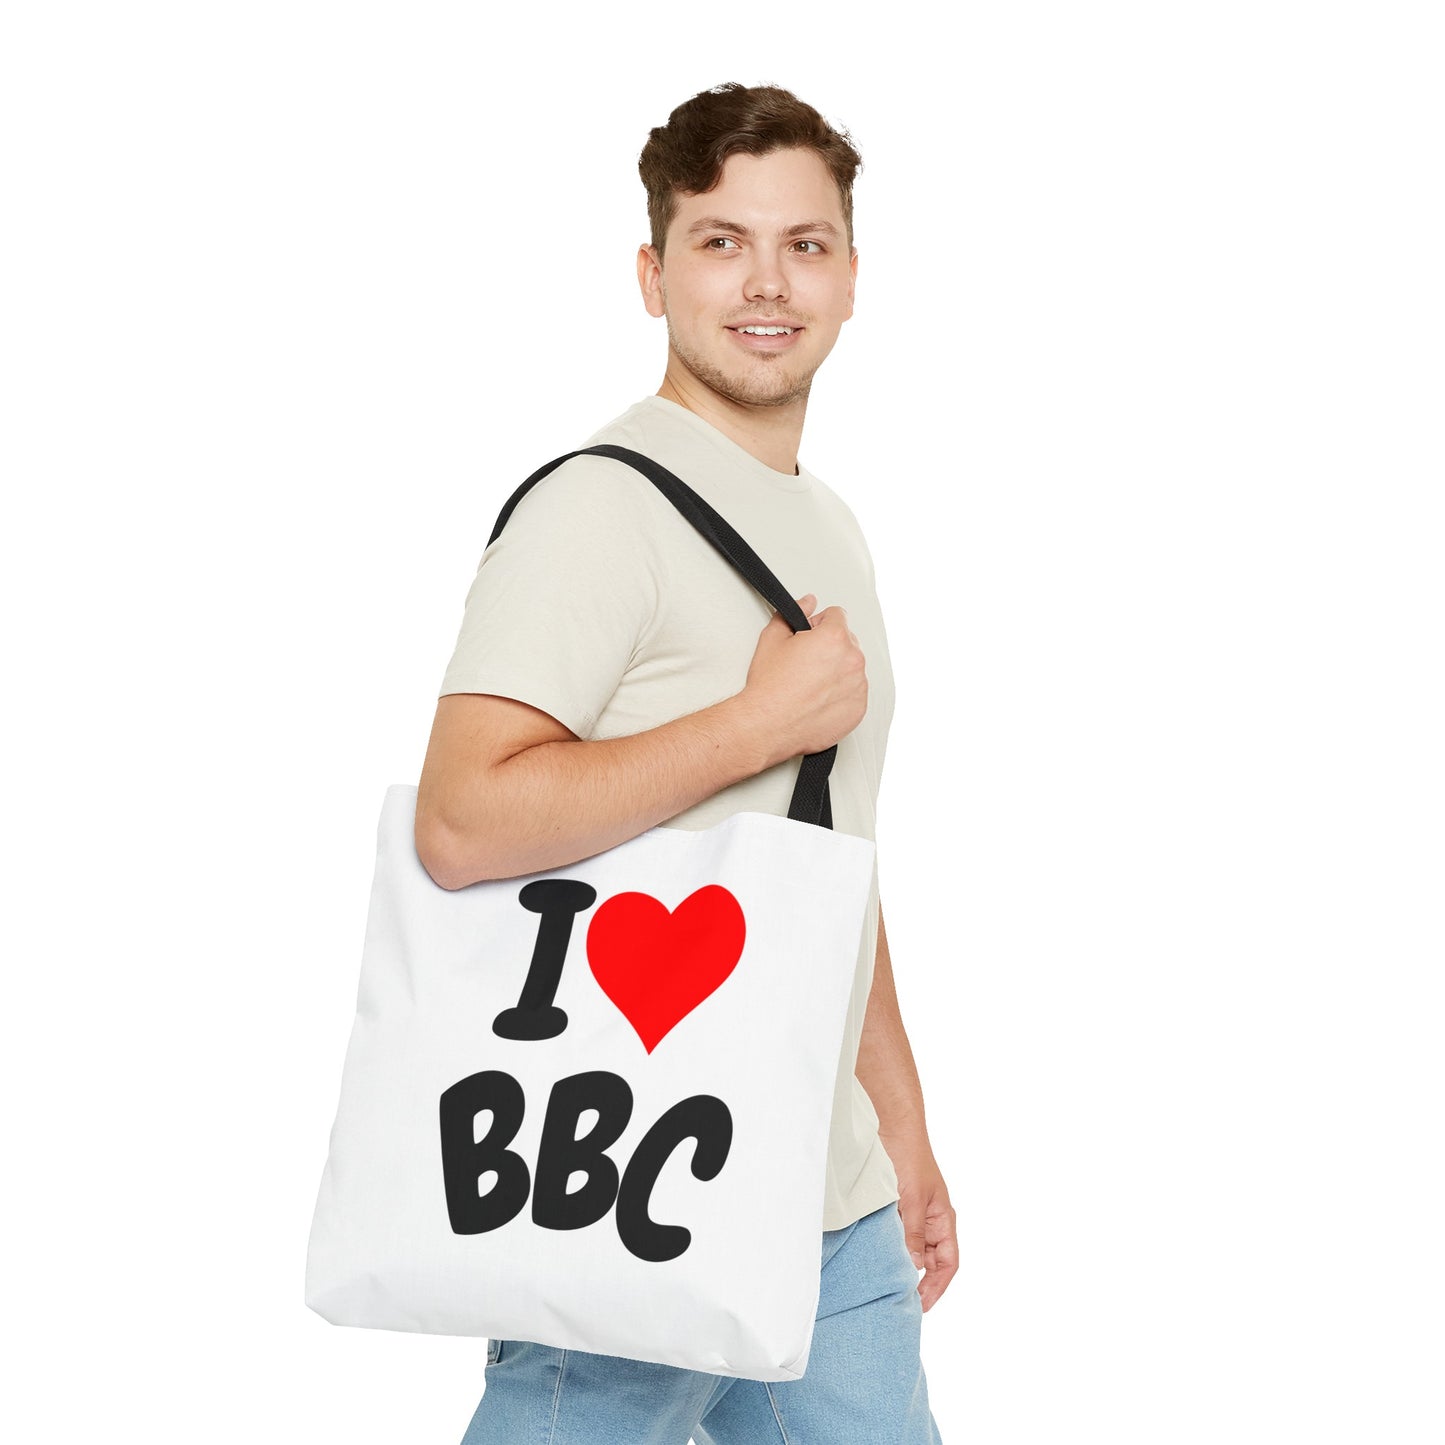 Juucie | "I Love BBC" Tote Bag - Juucie